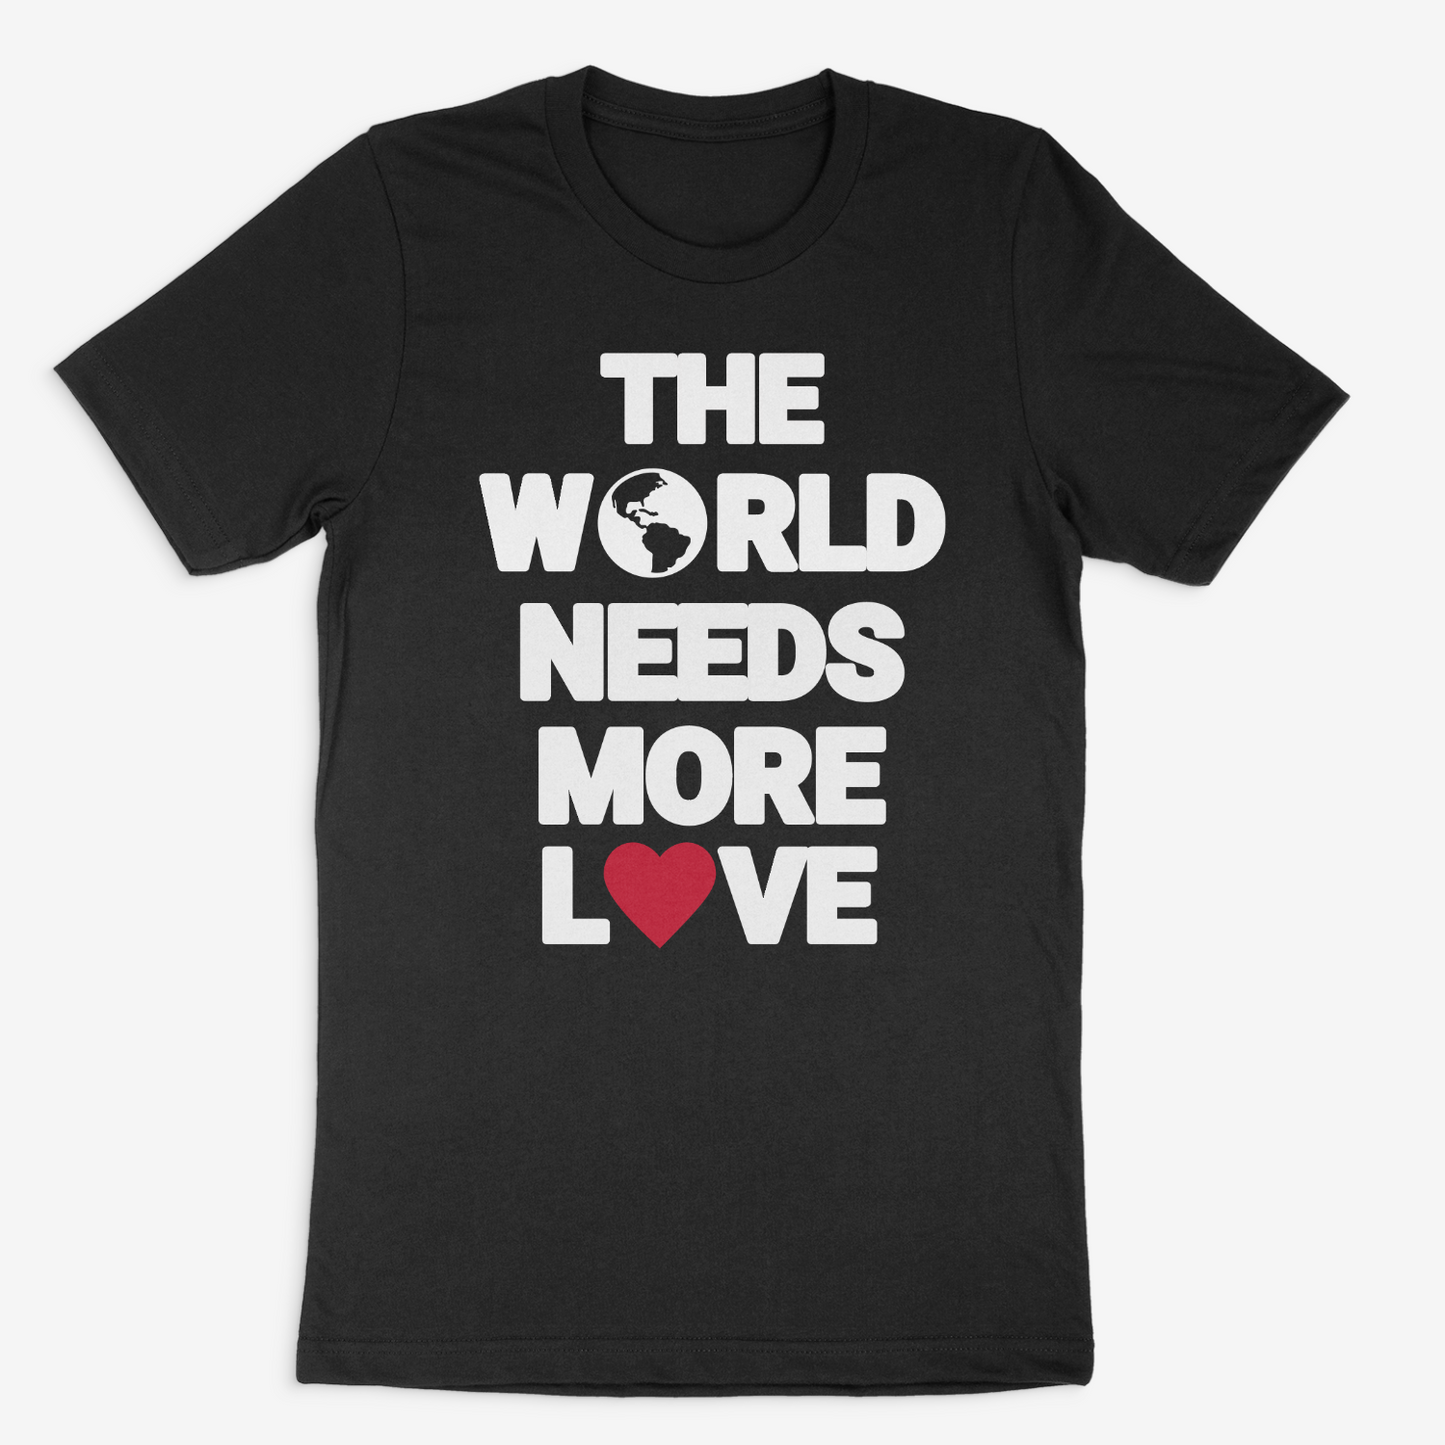 The World Needs Love (Black)